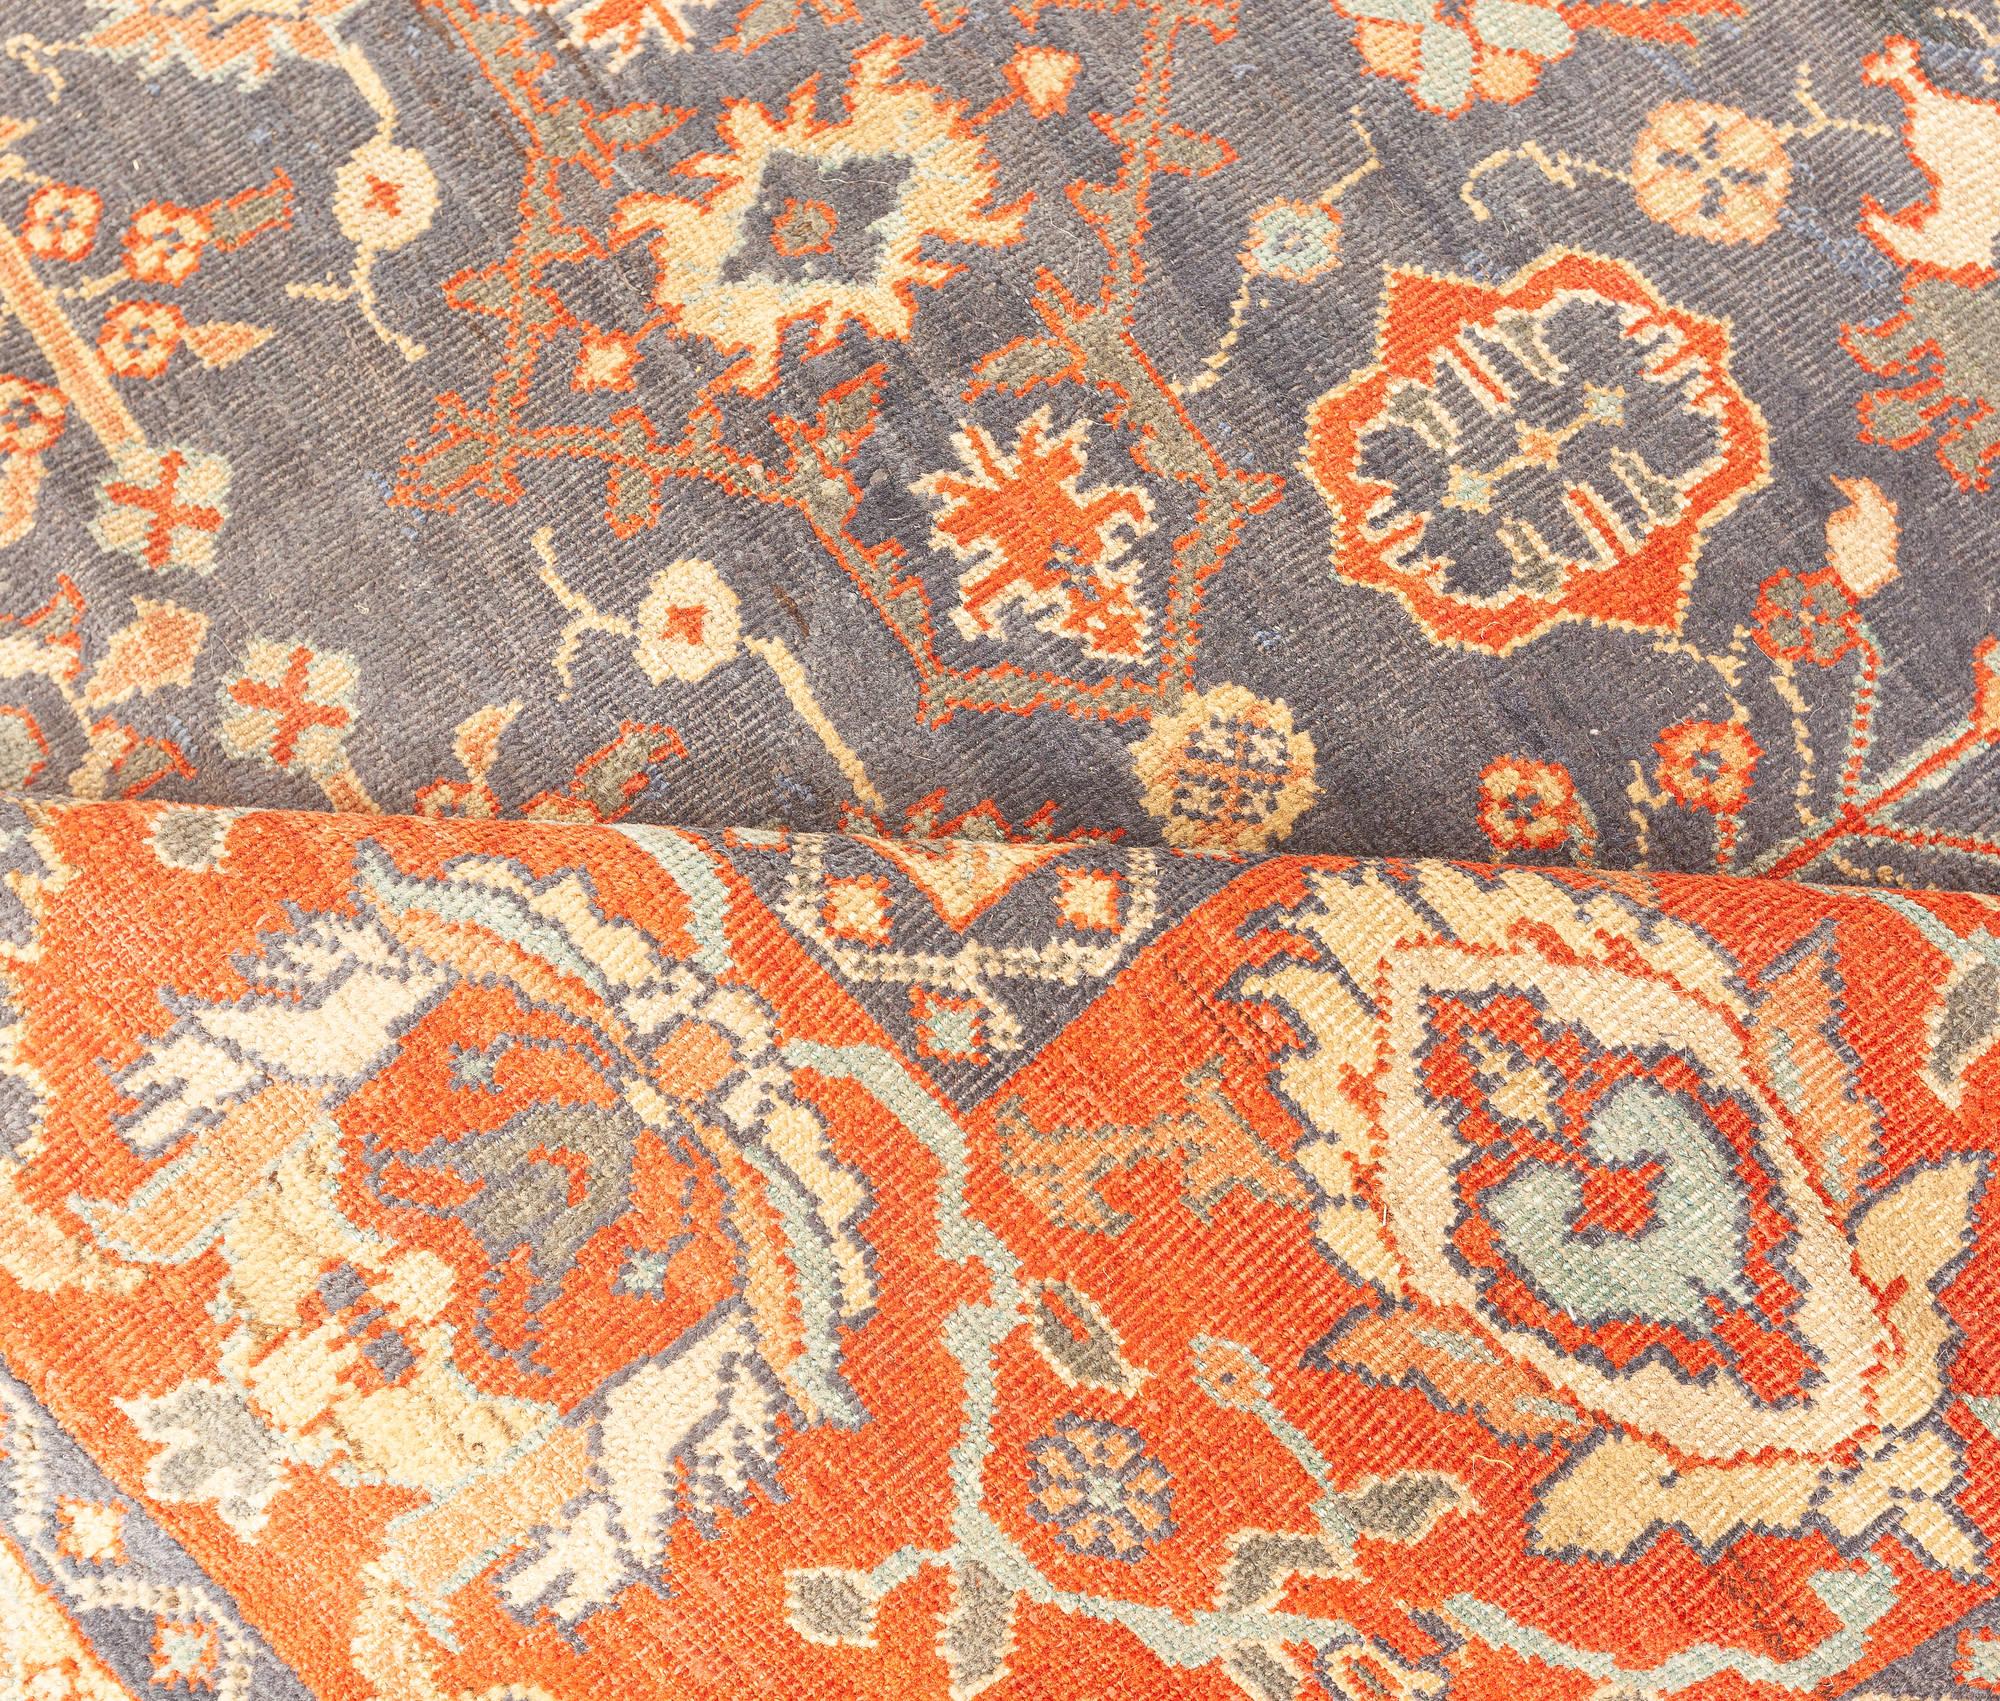 Early 20th entury Persian Sultanabad blue botanic handmade wool rug
Size: 10'10